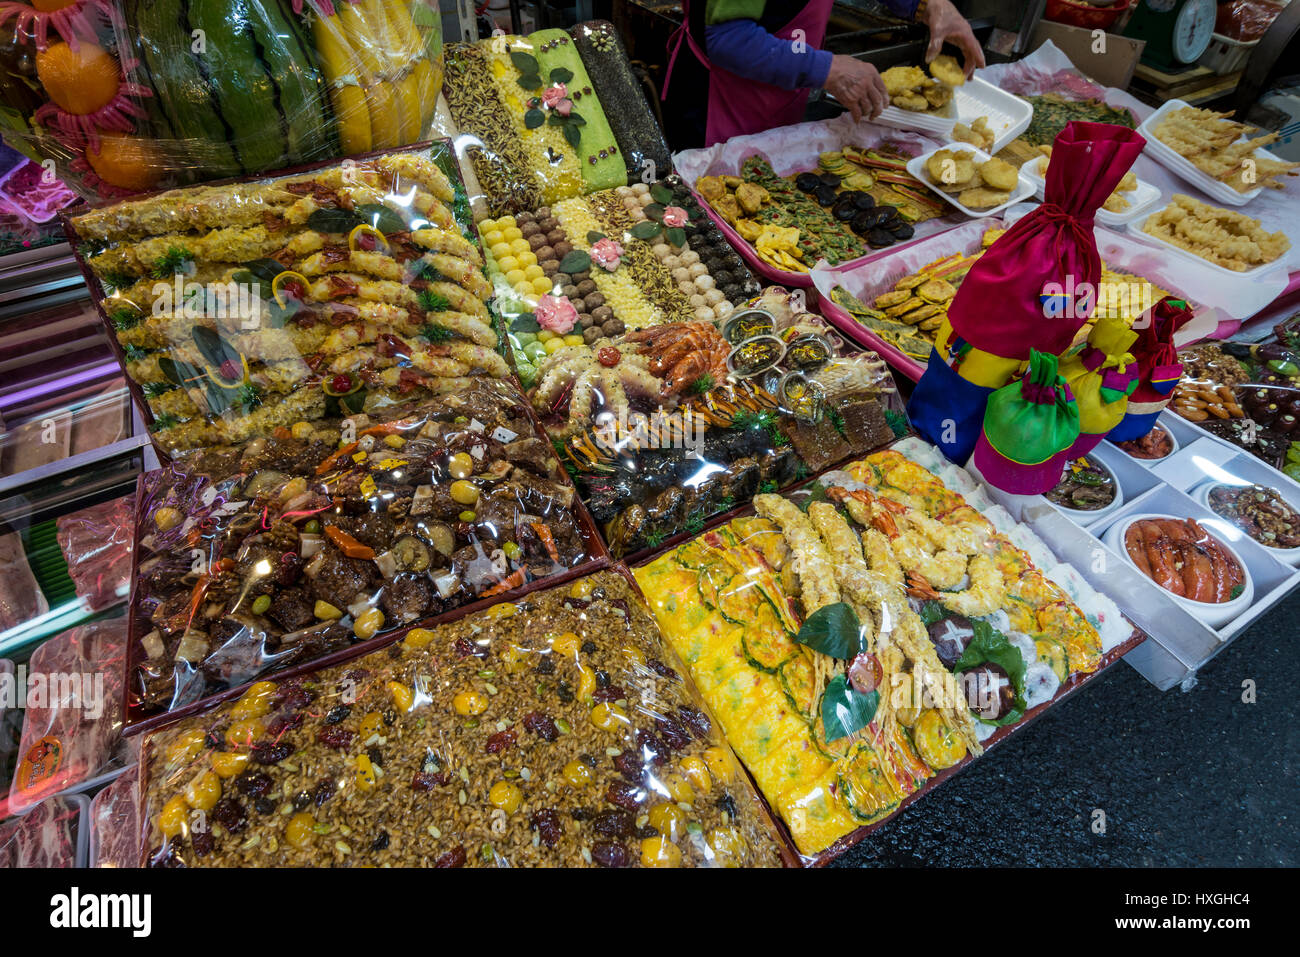 Shop selling ceremonial food for special occasions Gukje Market, aka International Market, Busan, South Korea Stock Photo